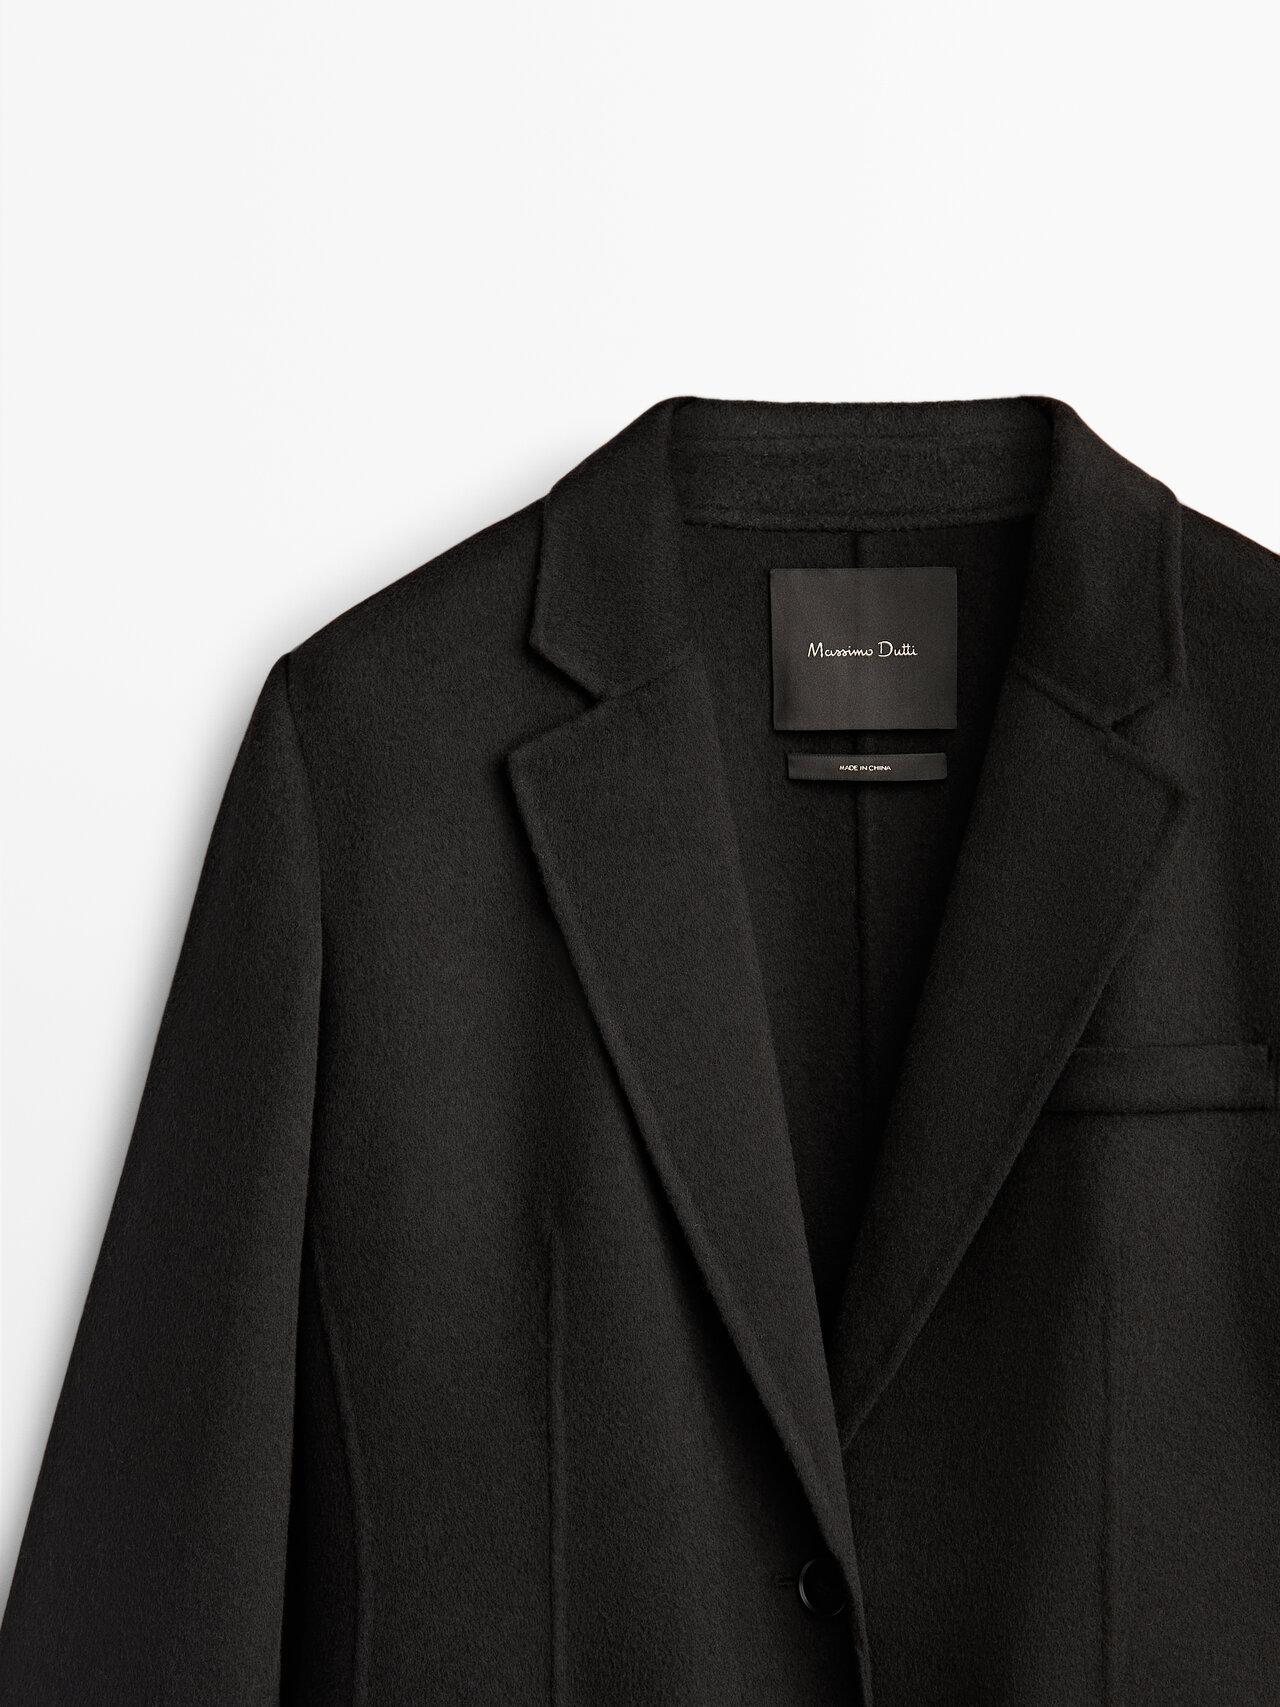 MASSIMO DUTTI Black Long Wool Coat | Lyst